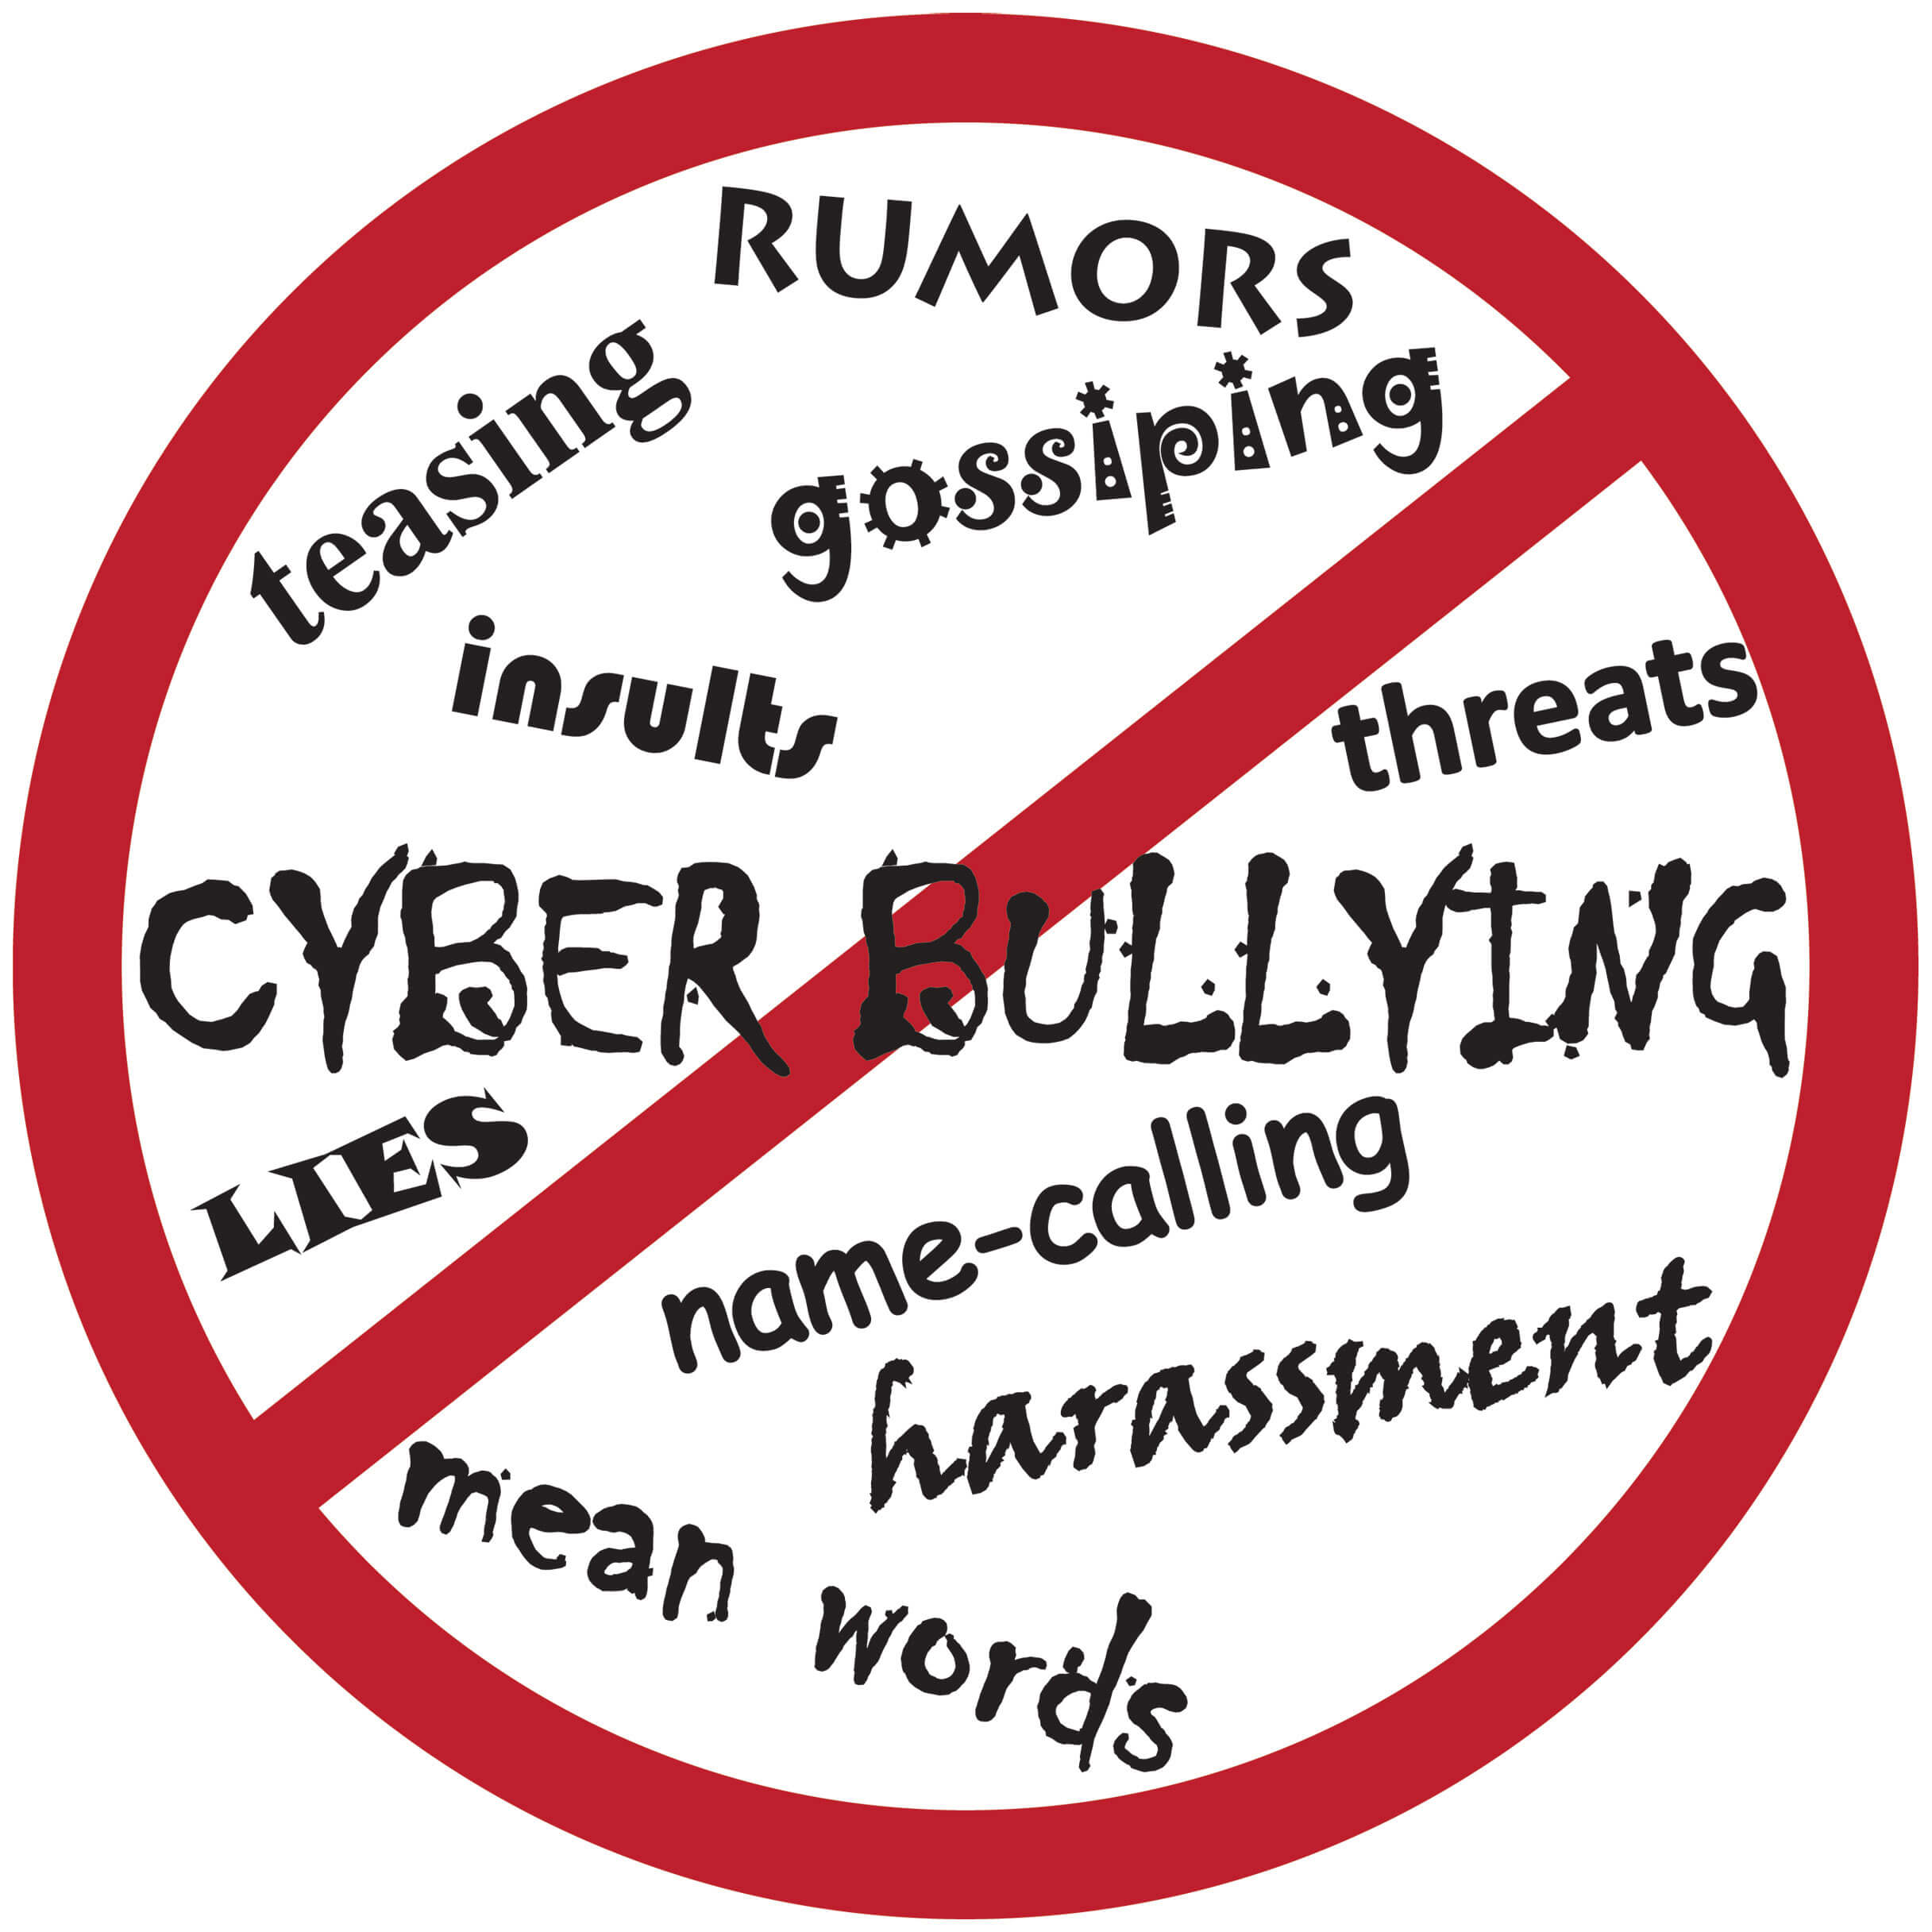 cyberbullying, rumors, mean words, name calling, harassment